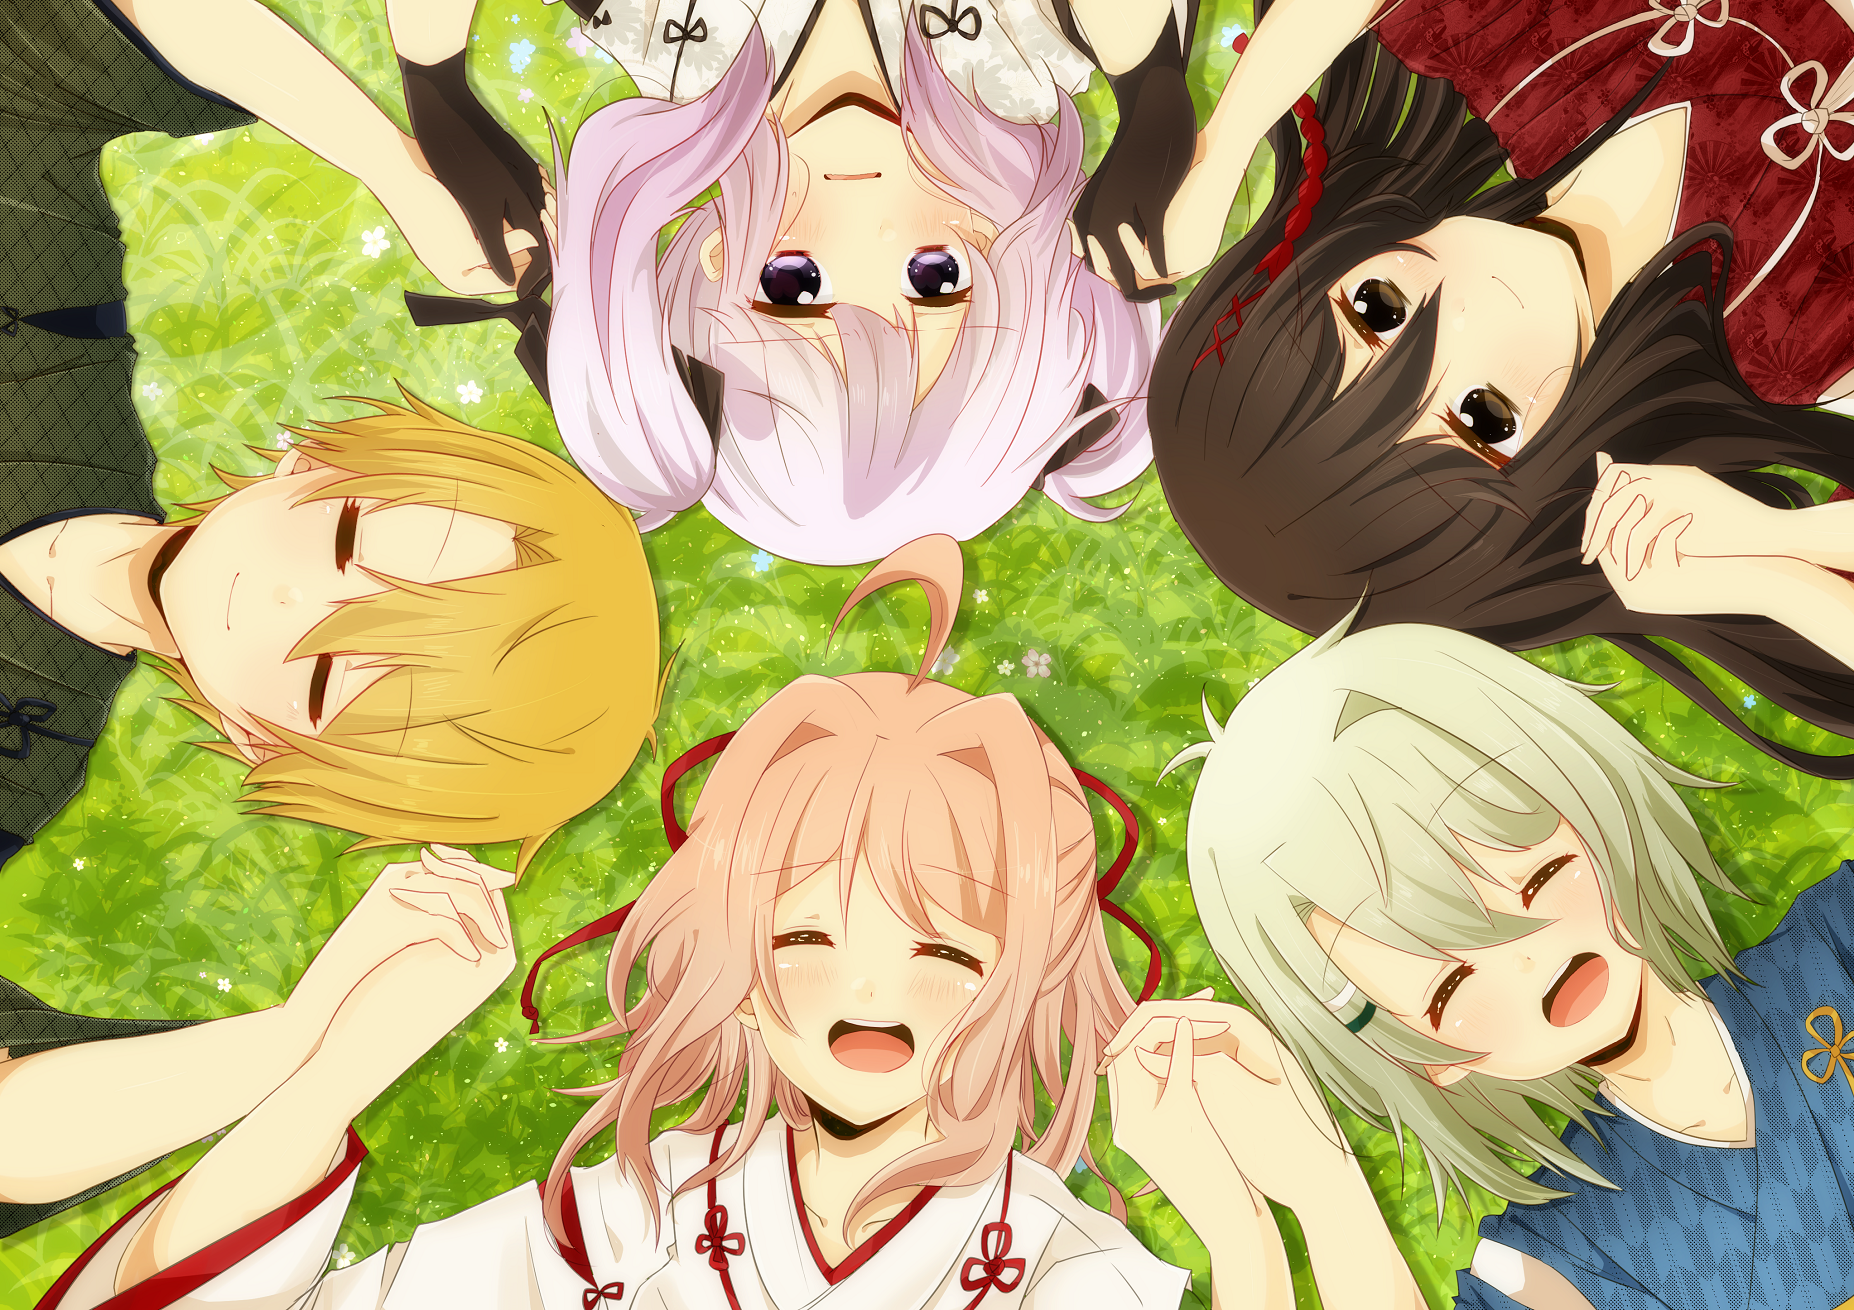 Anime Mikagura School Suite HD Wallpaper | Background Image